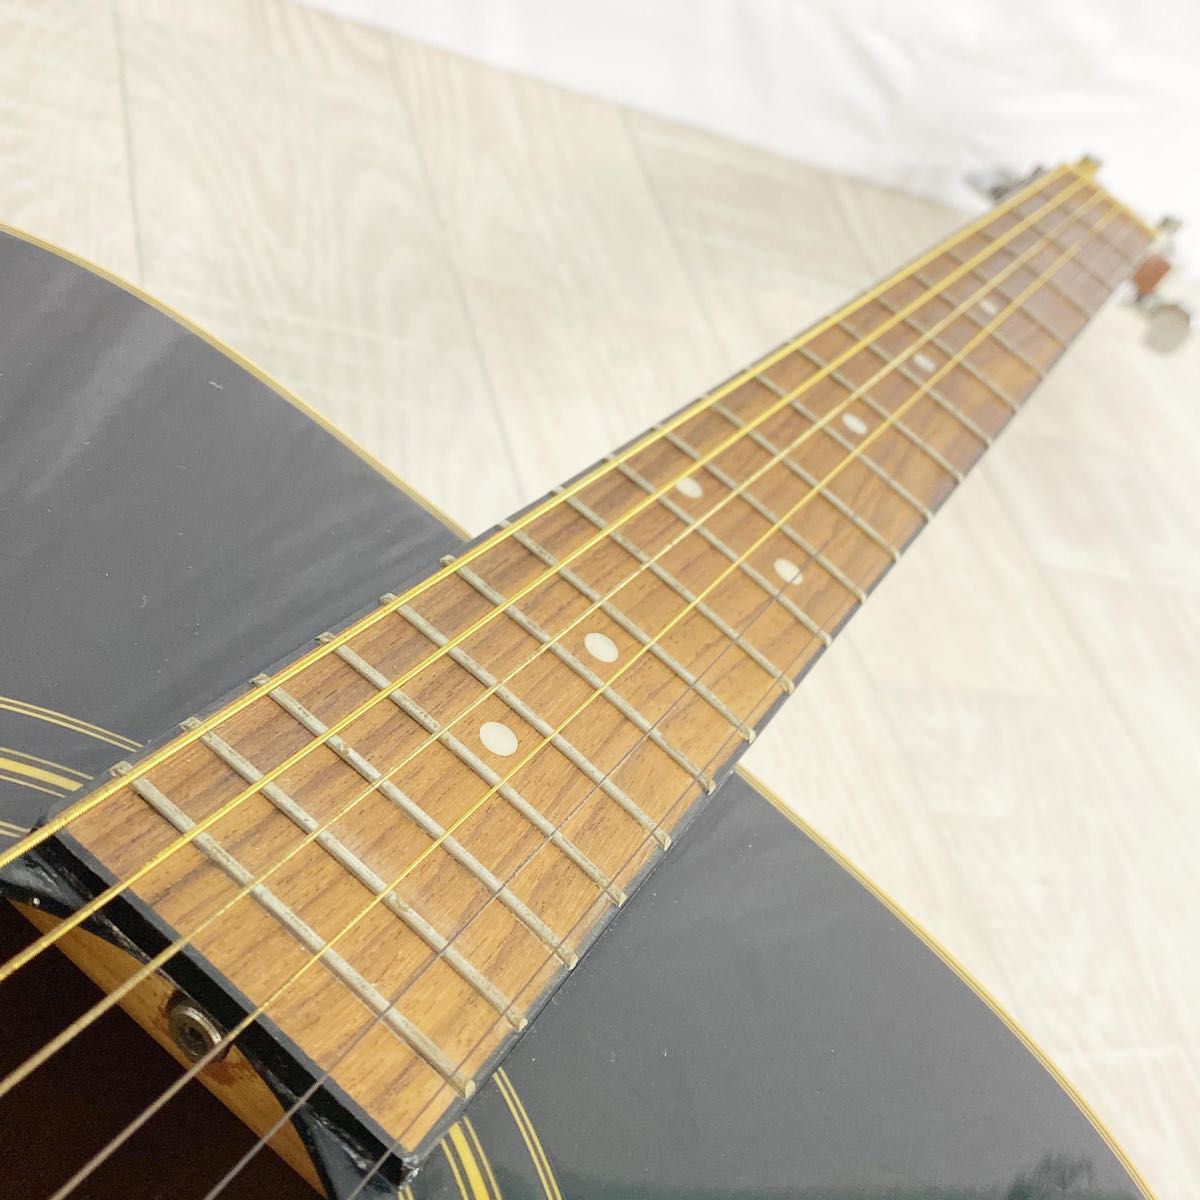 Fender フェンダー アコースティックギター SAC-02 ソフトケース付